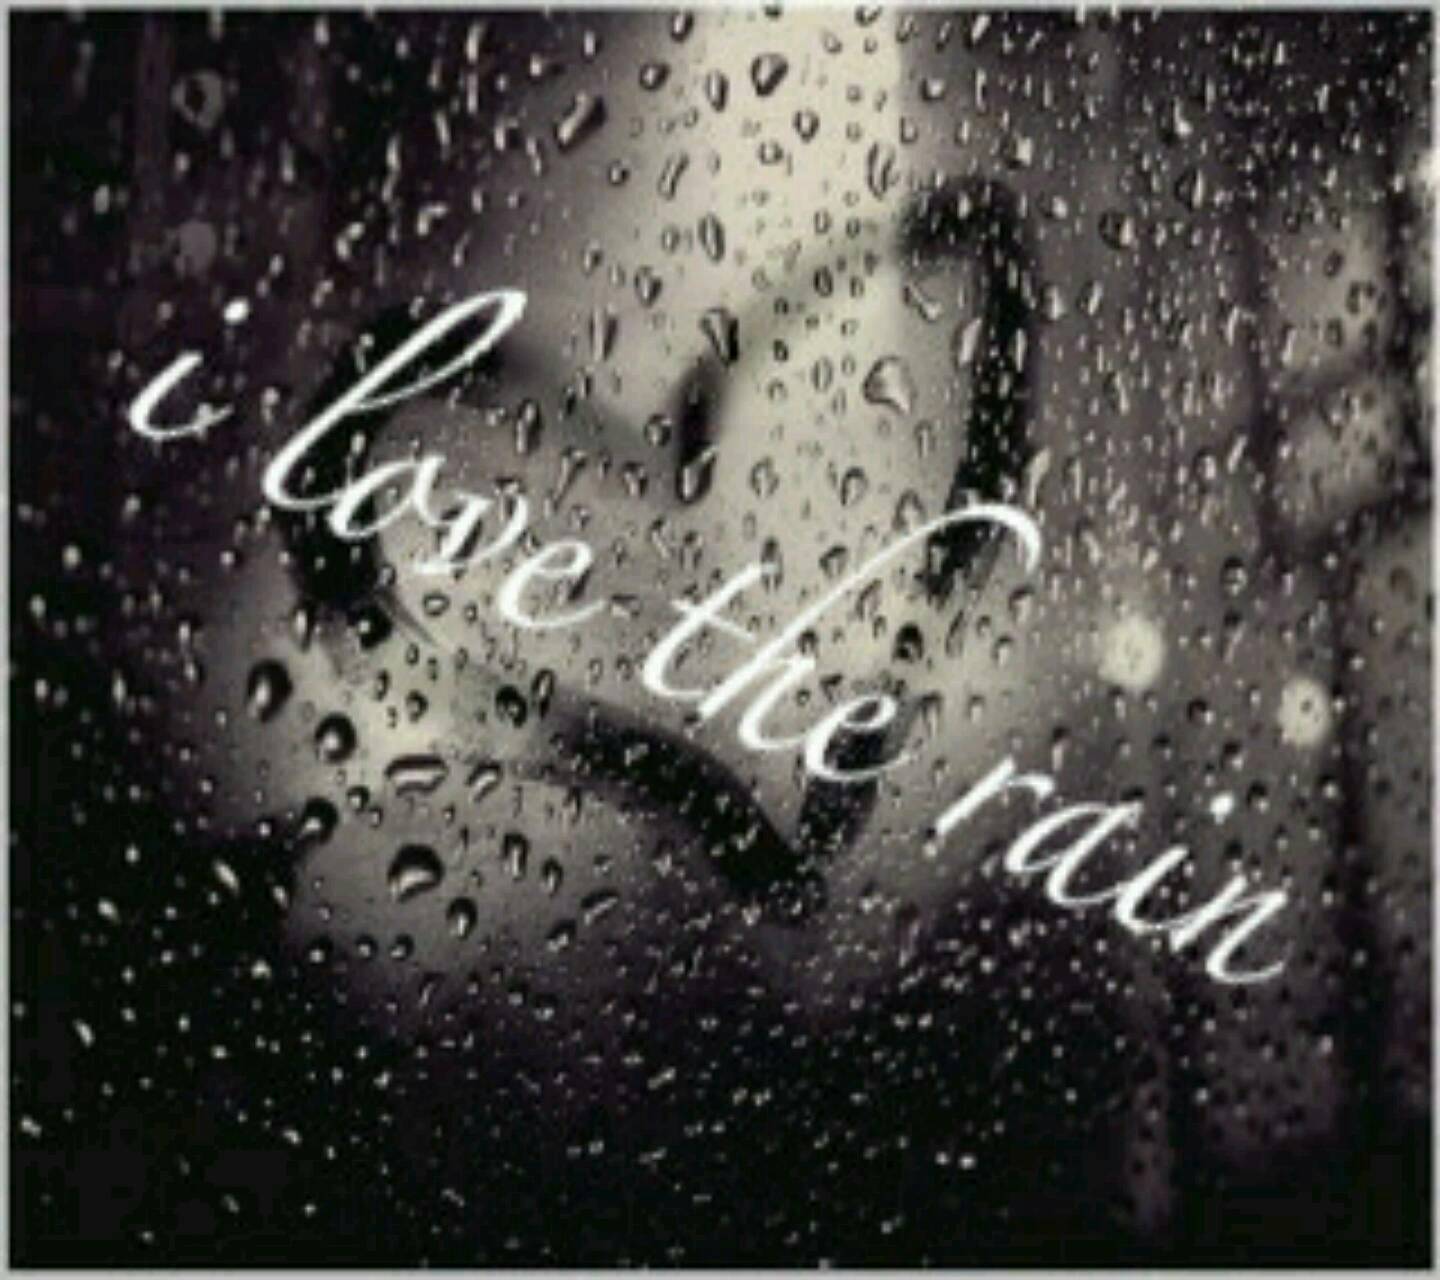 Love Rain Wallpapers  Top Free Love Rain Backgrounds  WallpaperAccess